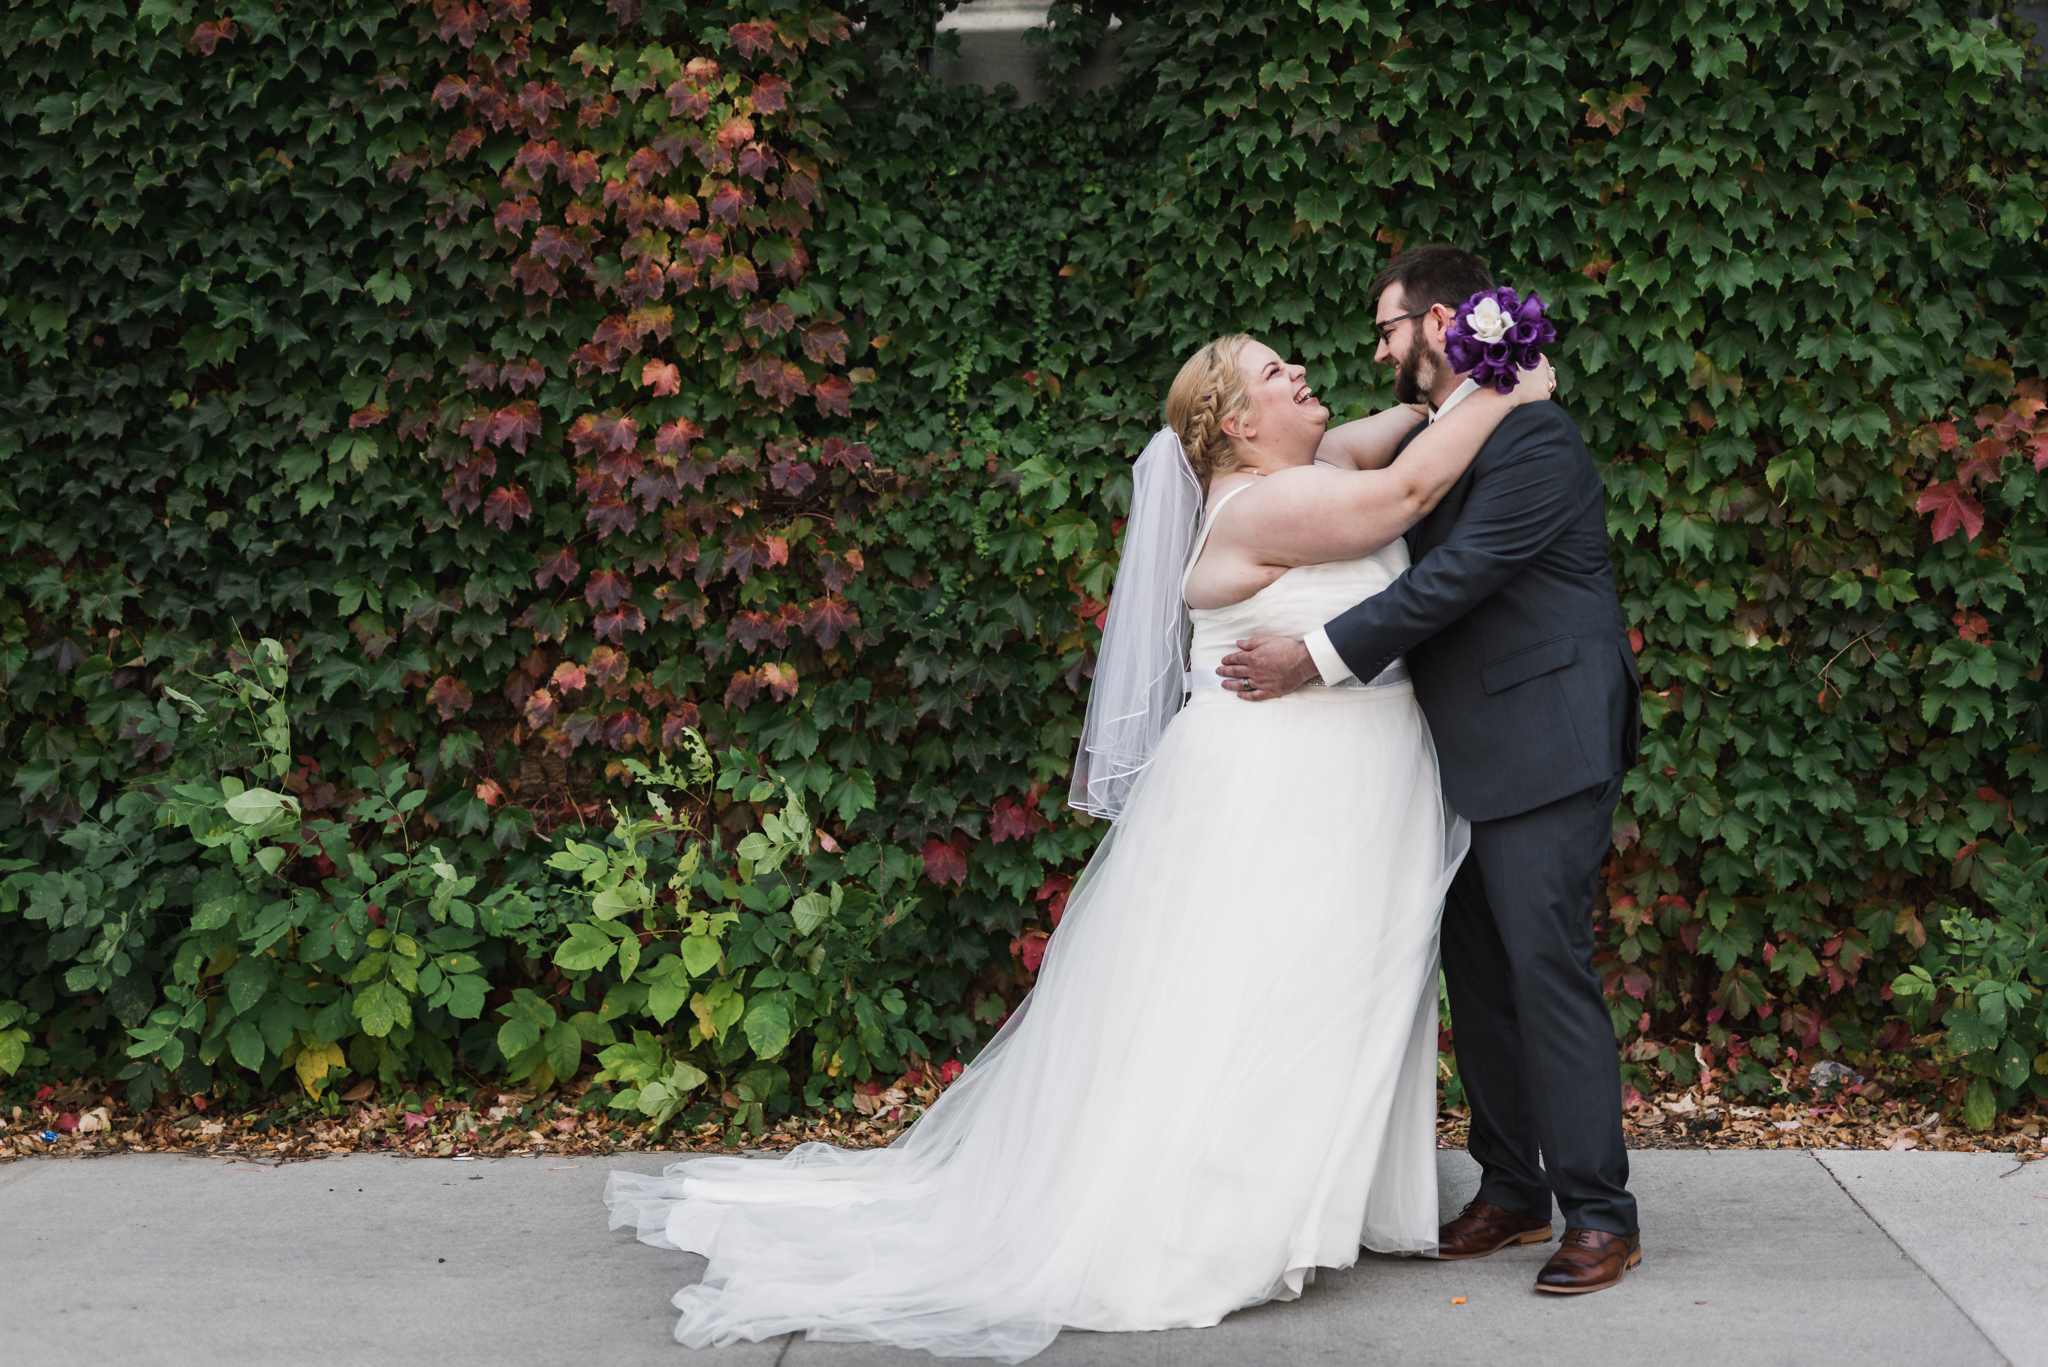 Sanctuary Events Center Wedding by Chelsea Joy Photography | Fargo, ND Wedding Photography